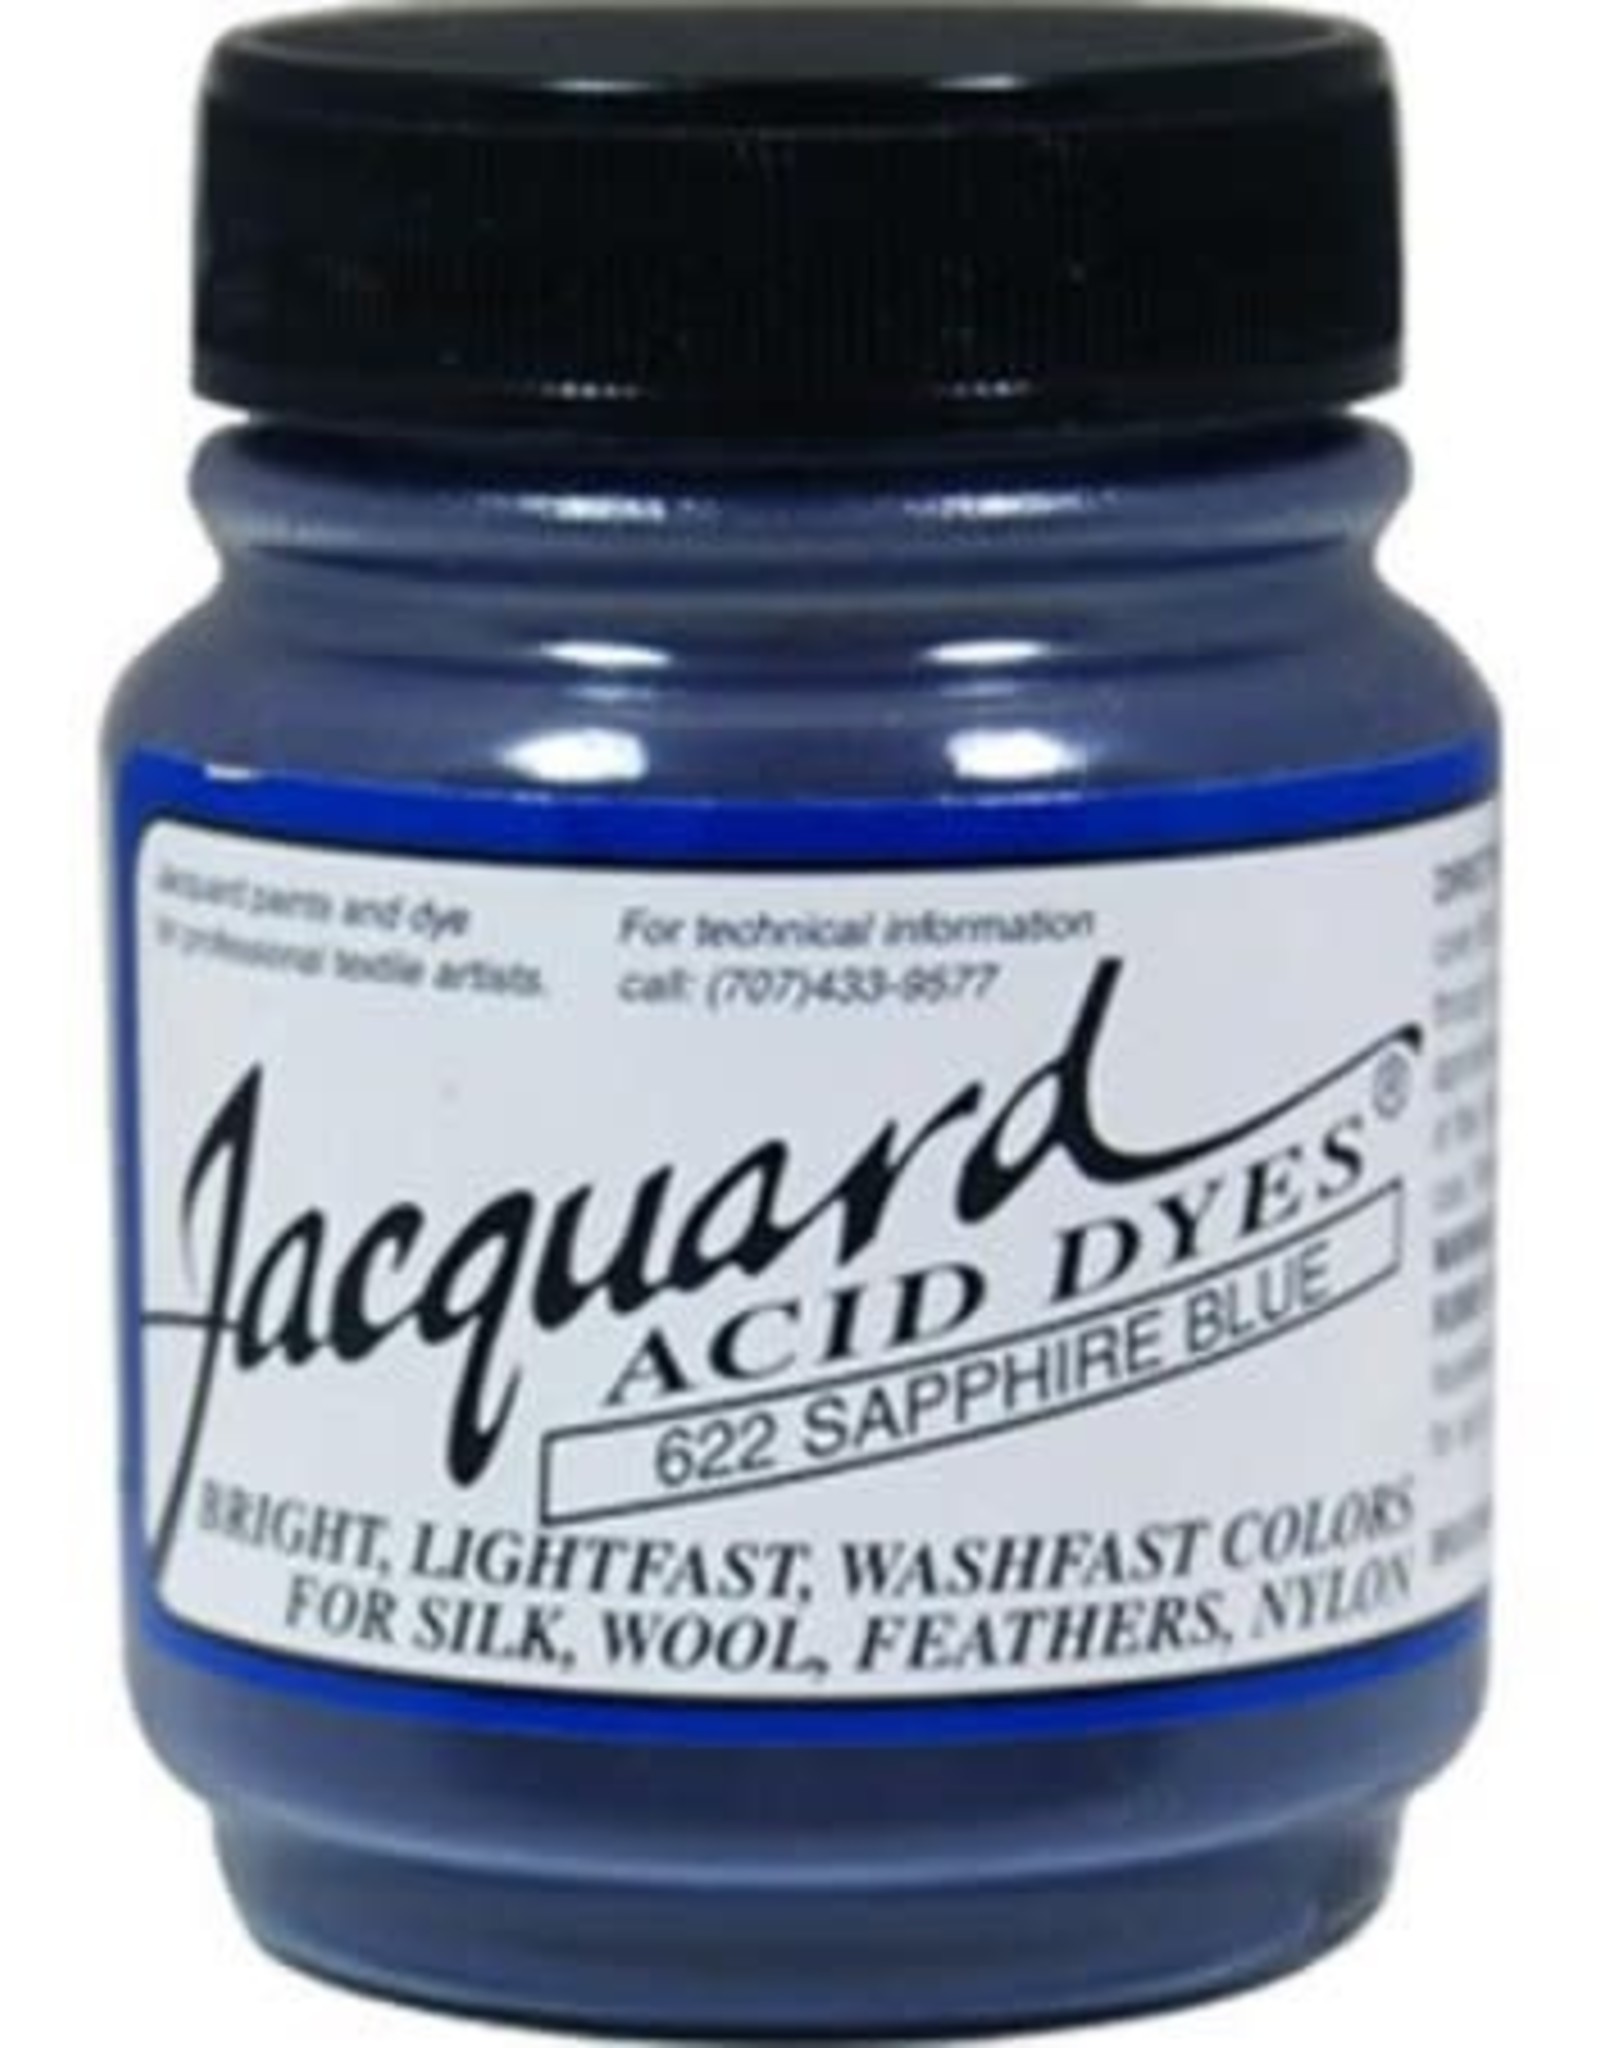 Jacquard Acid Dye Sapphire Blue